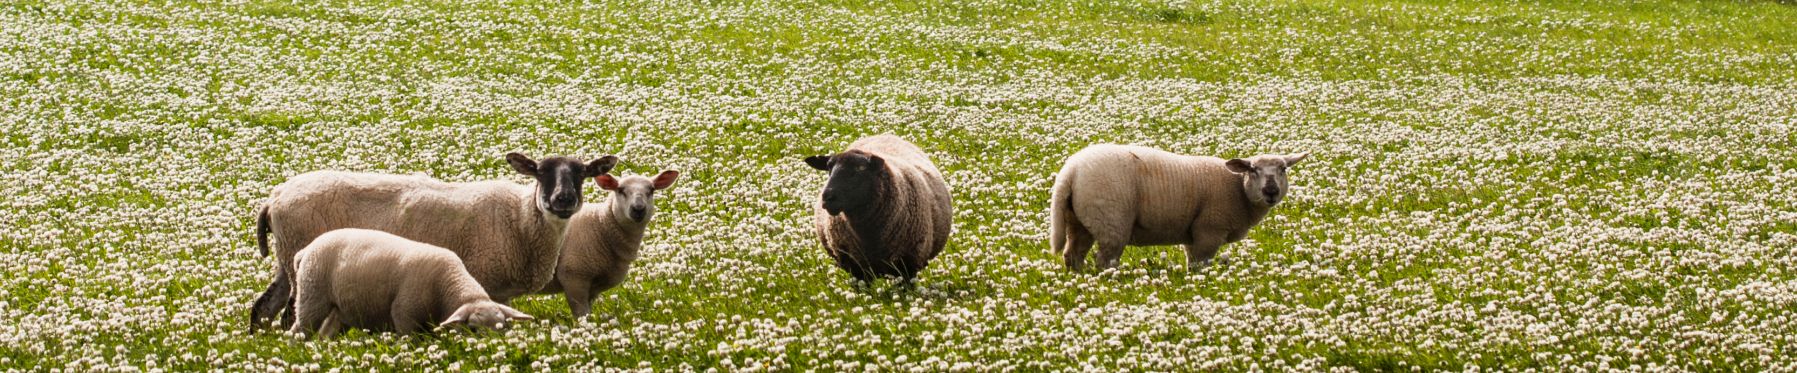 Grazing Sheep on Isle of Skye-Outer Hebredies-Harris Tweed Hand Woven-Puffin Gear Harris Tweed Hats